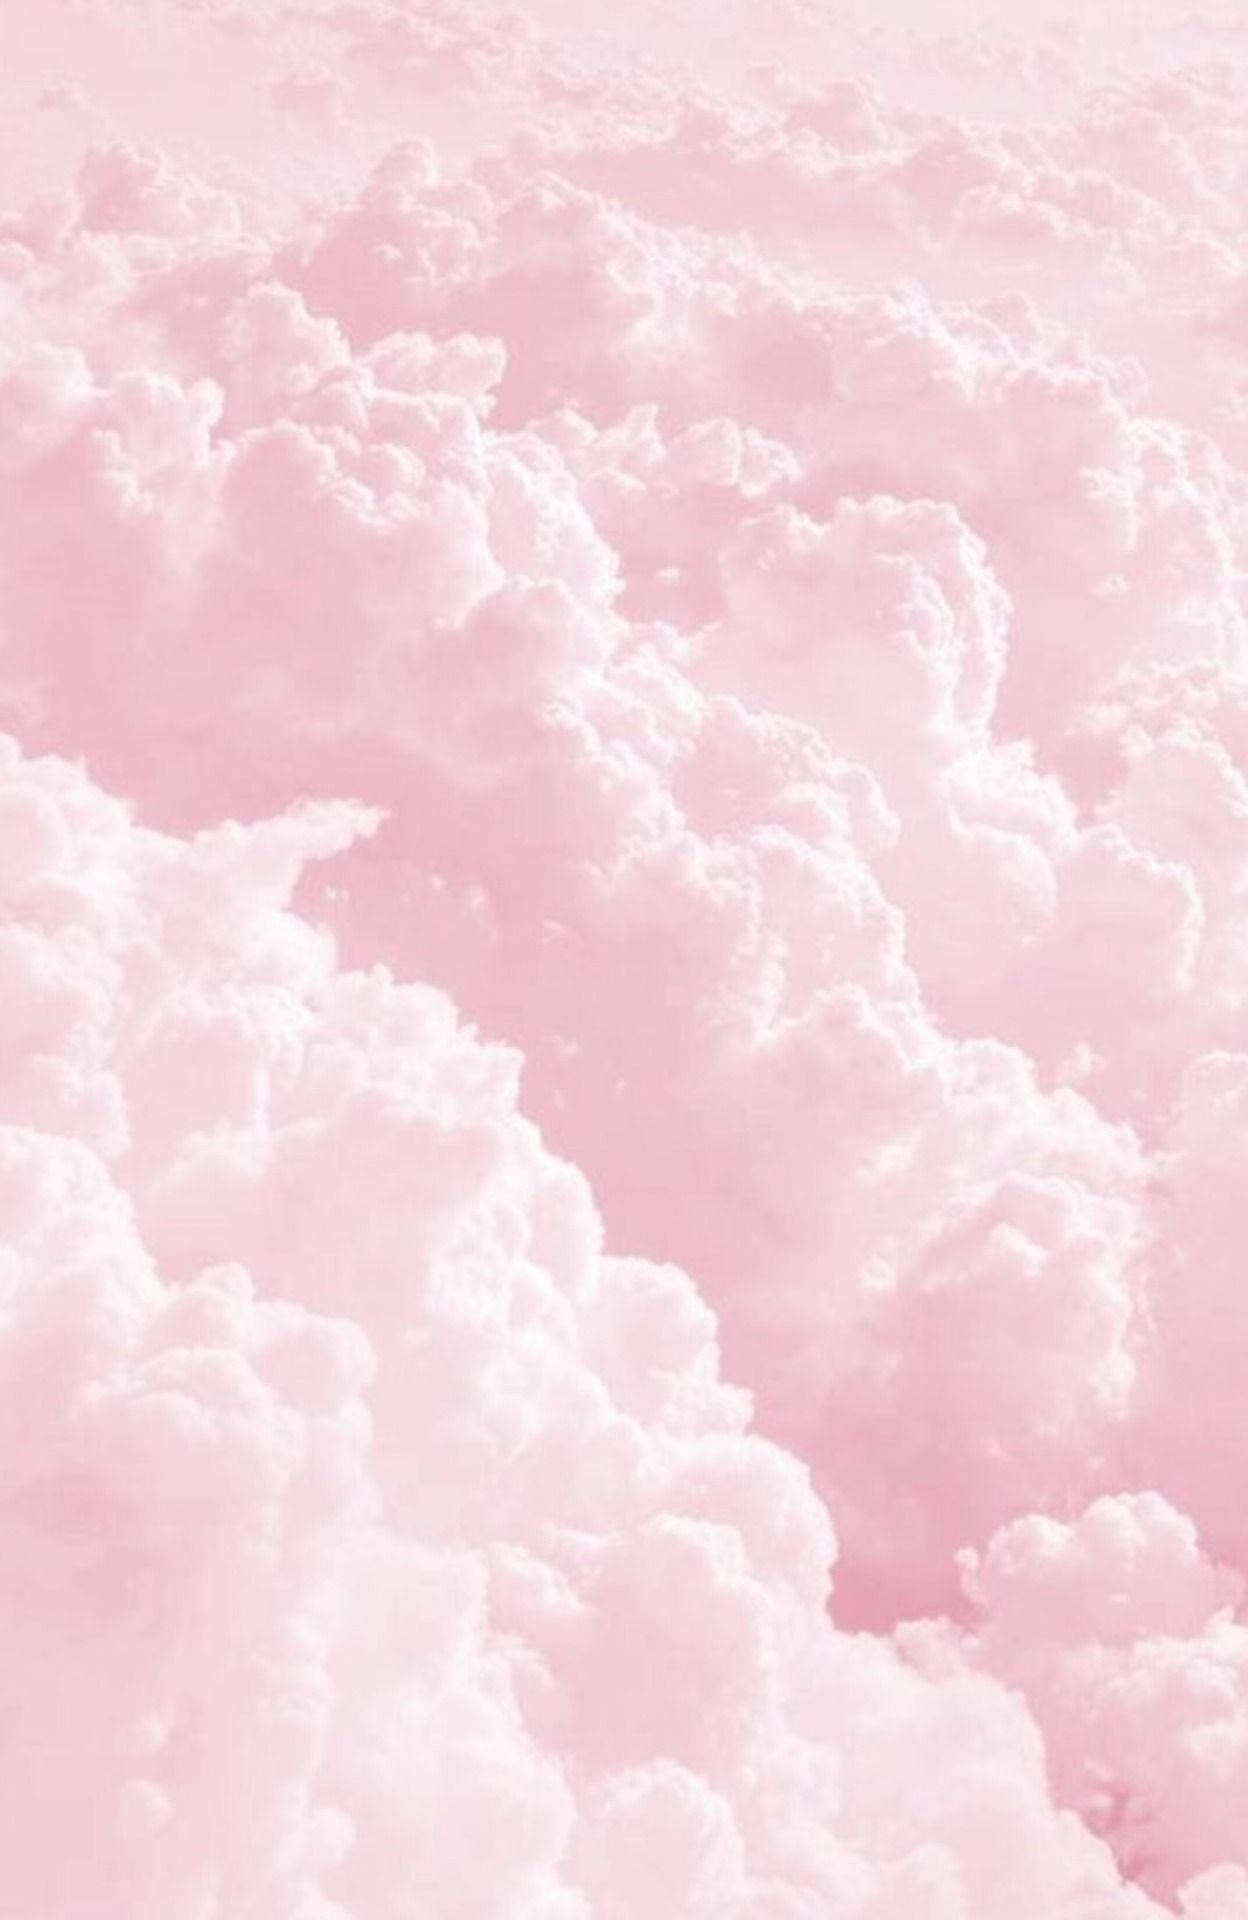 Cute Pink Aesthetic Cumulus Clouds In Sky Wallpaper